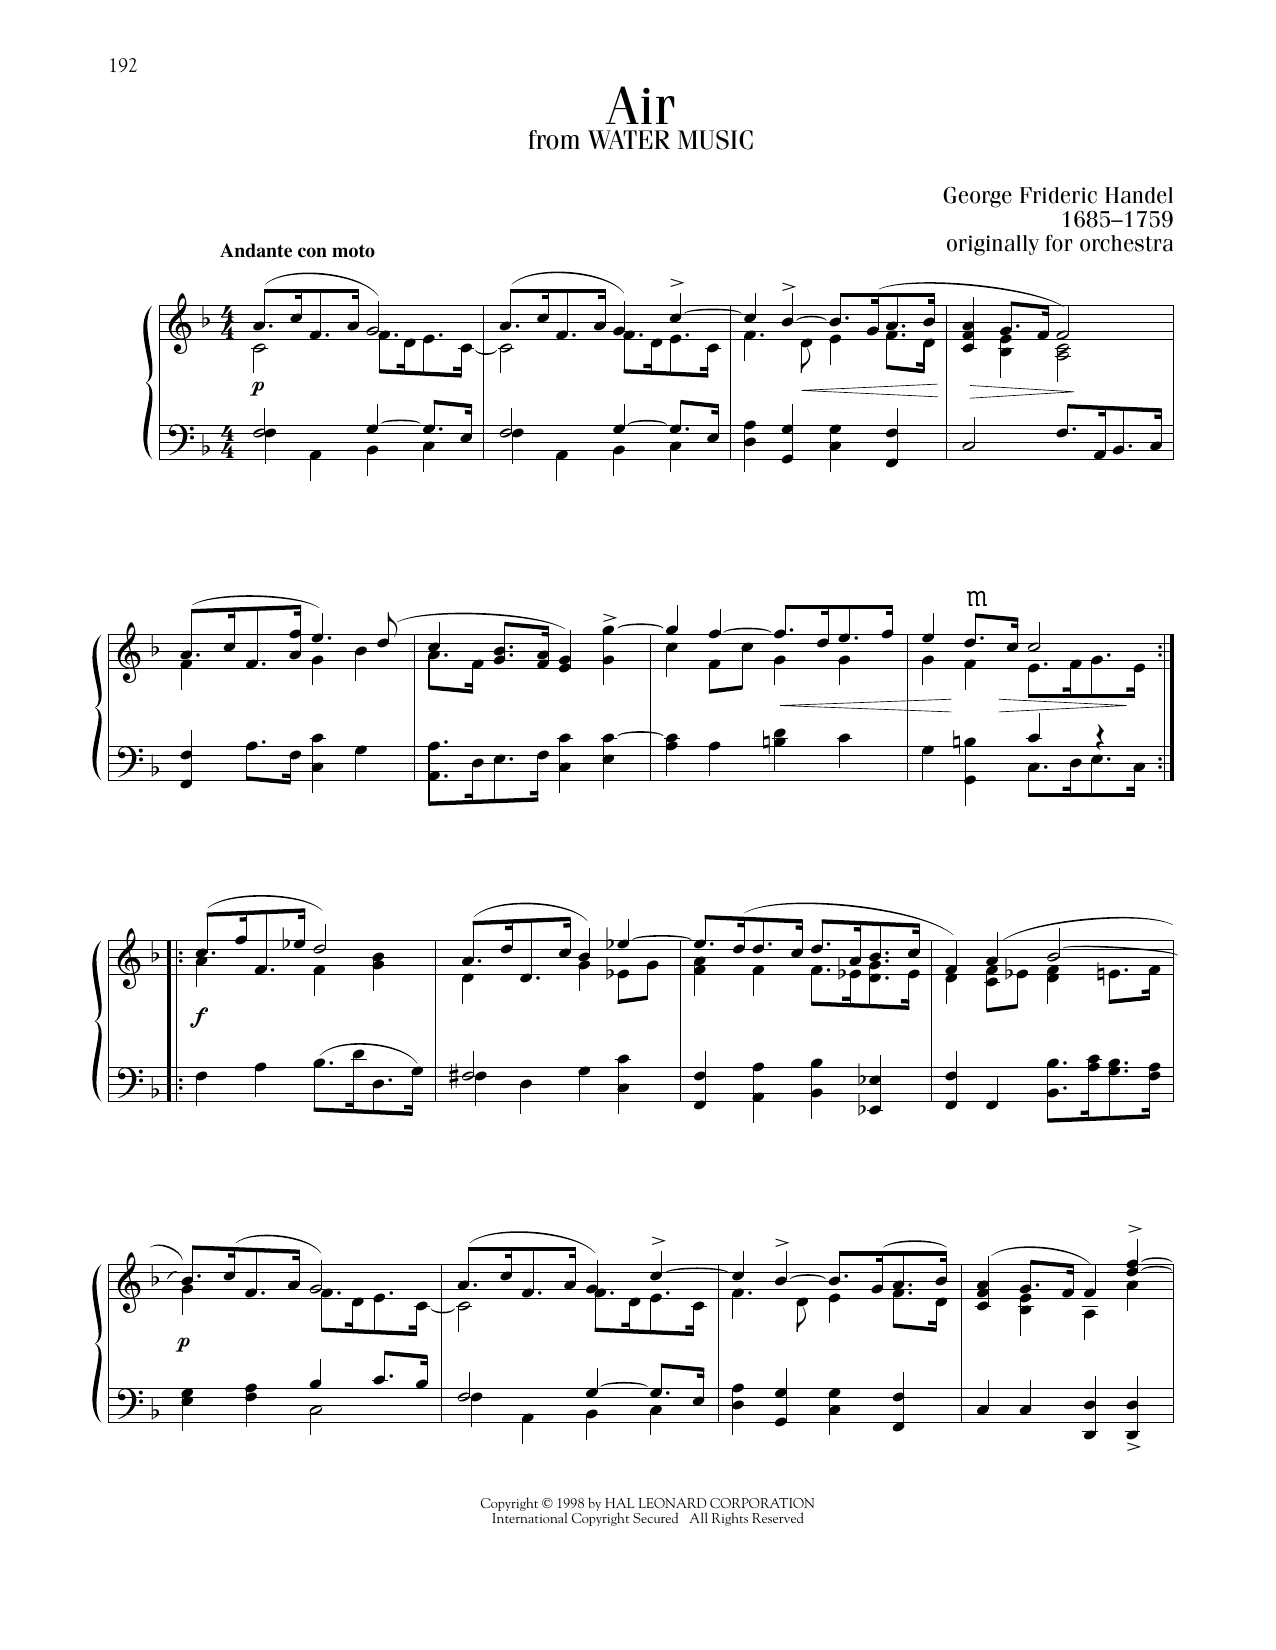 George Frideric Handel Air sheet music notes printable PDF score